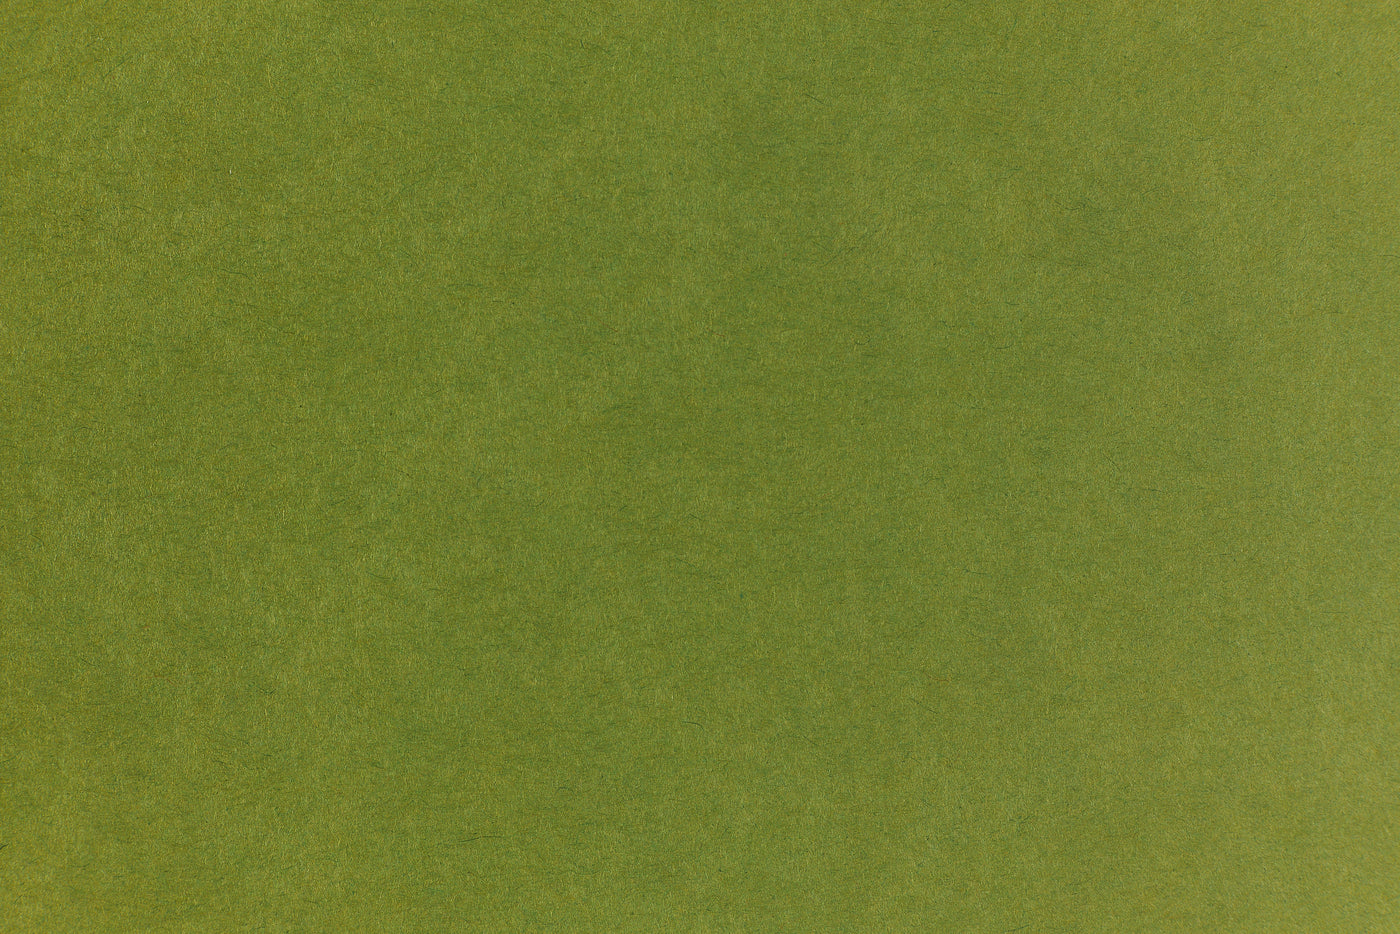 Jellybean Green Envelope (Pop-Tone)